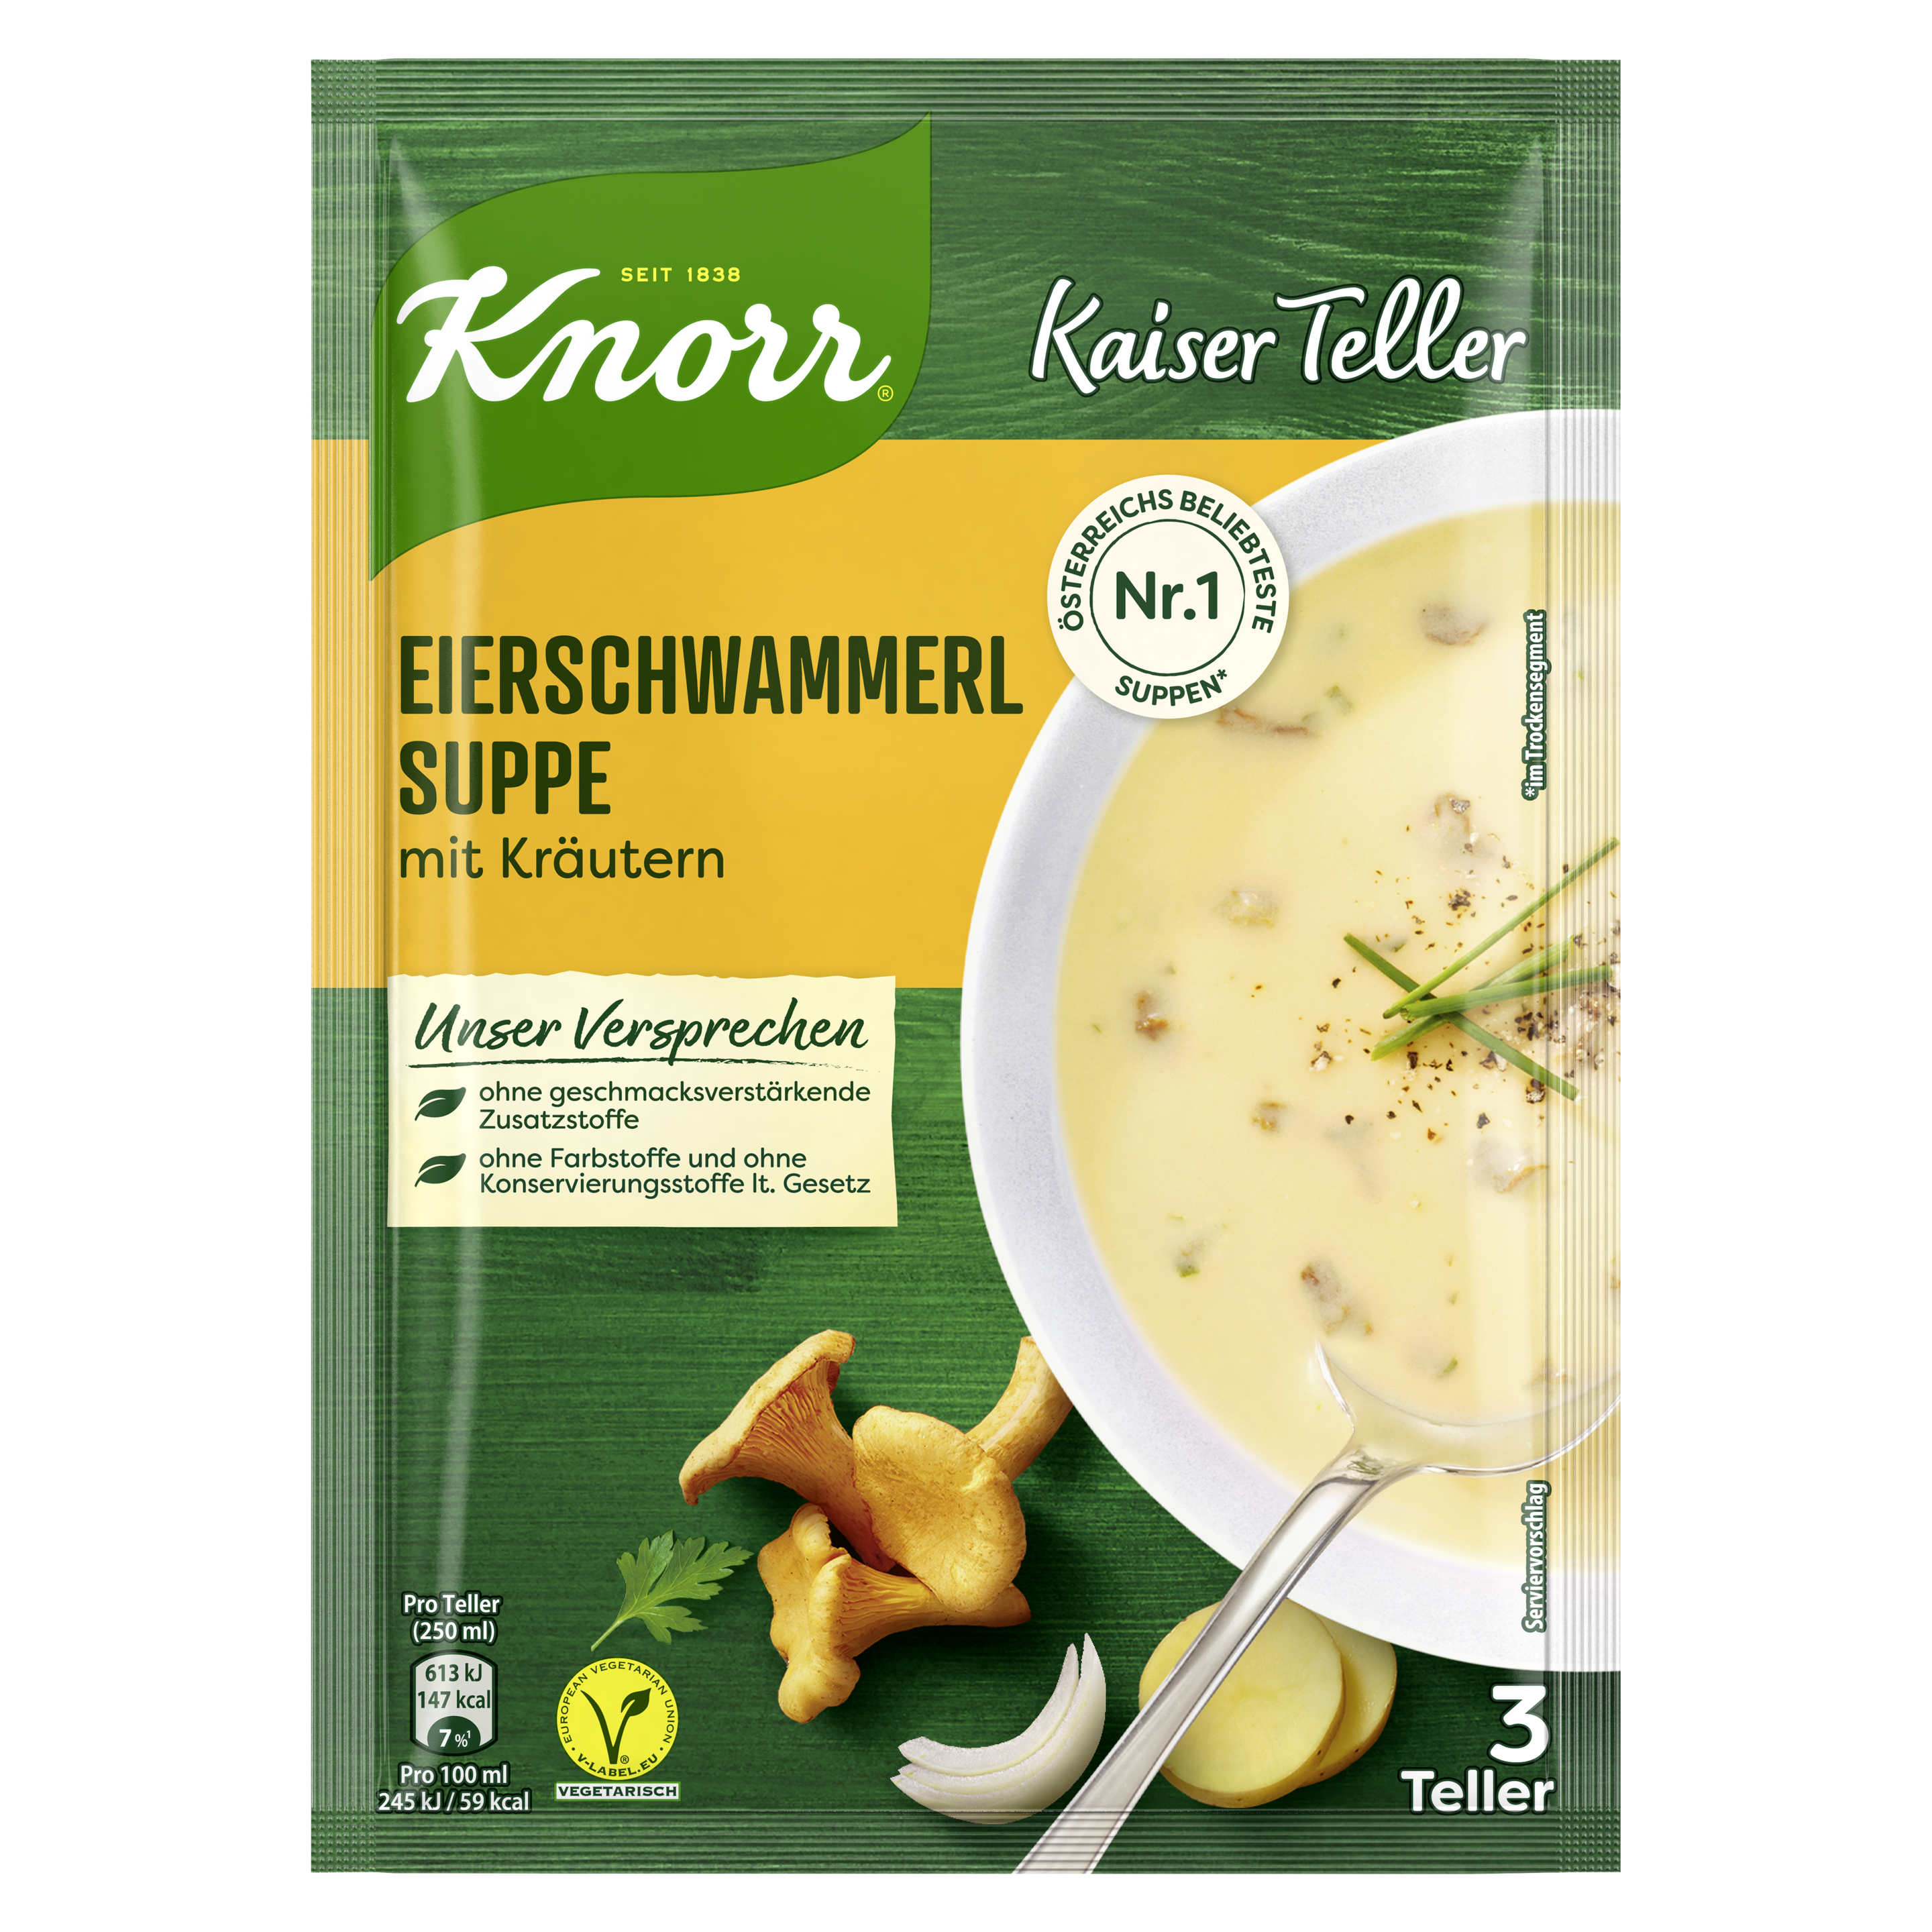 Knorr Kaiser Teller Eierschwammerl Suppe 3 Teller